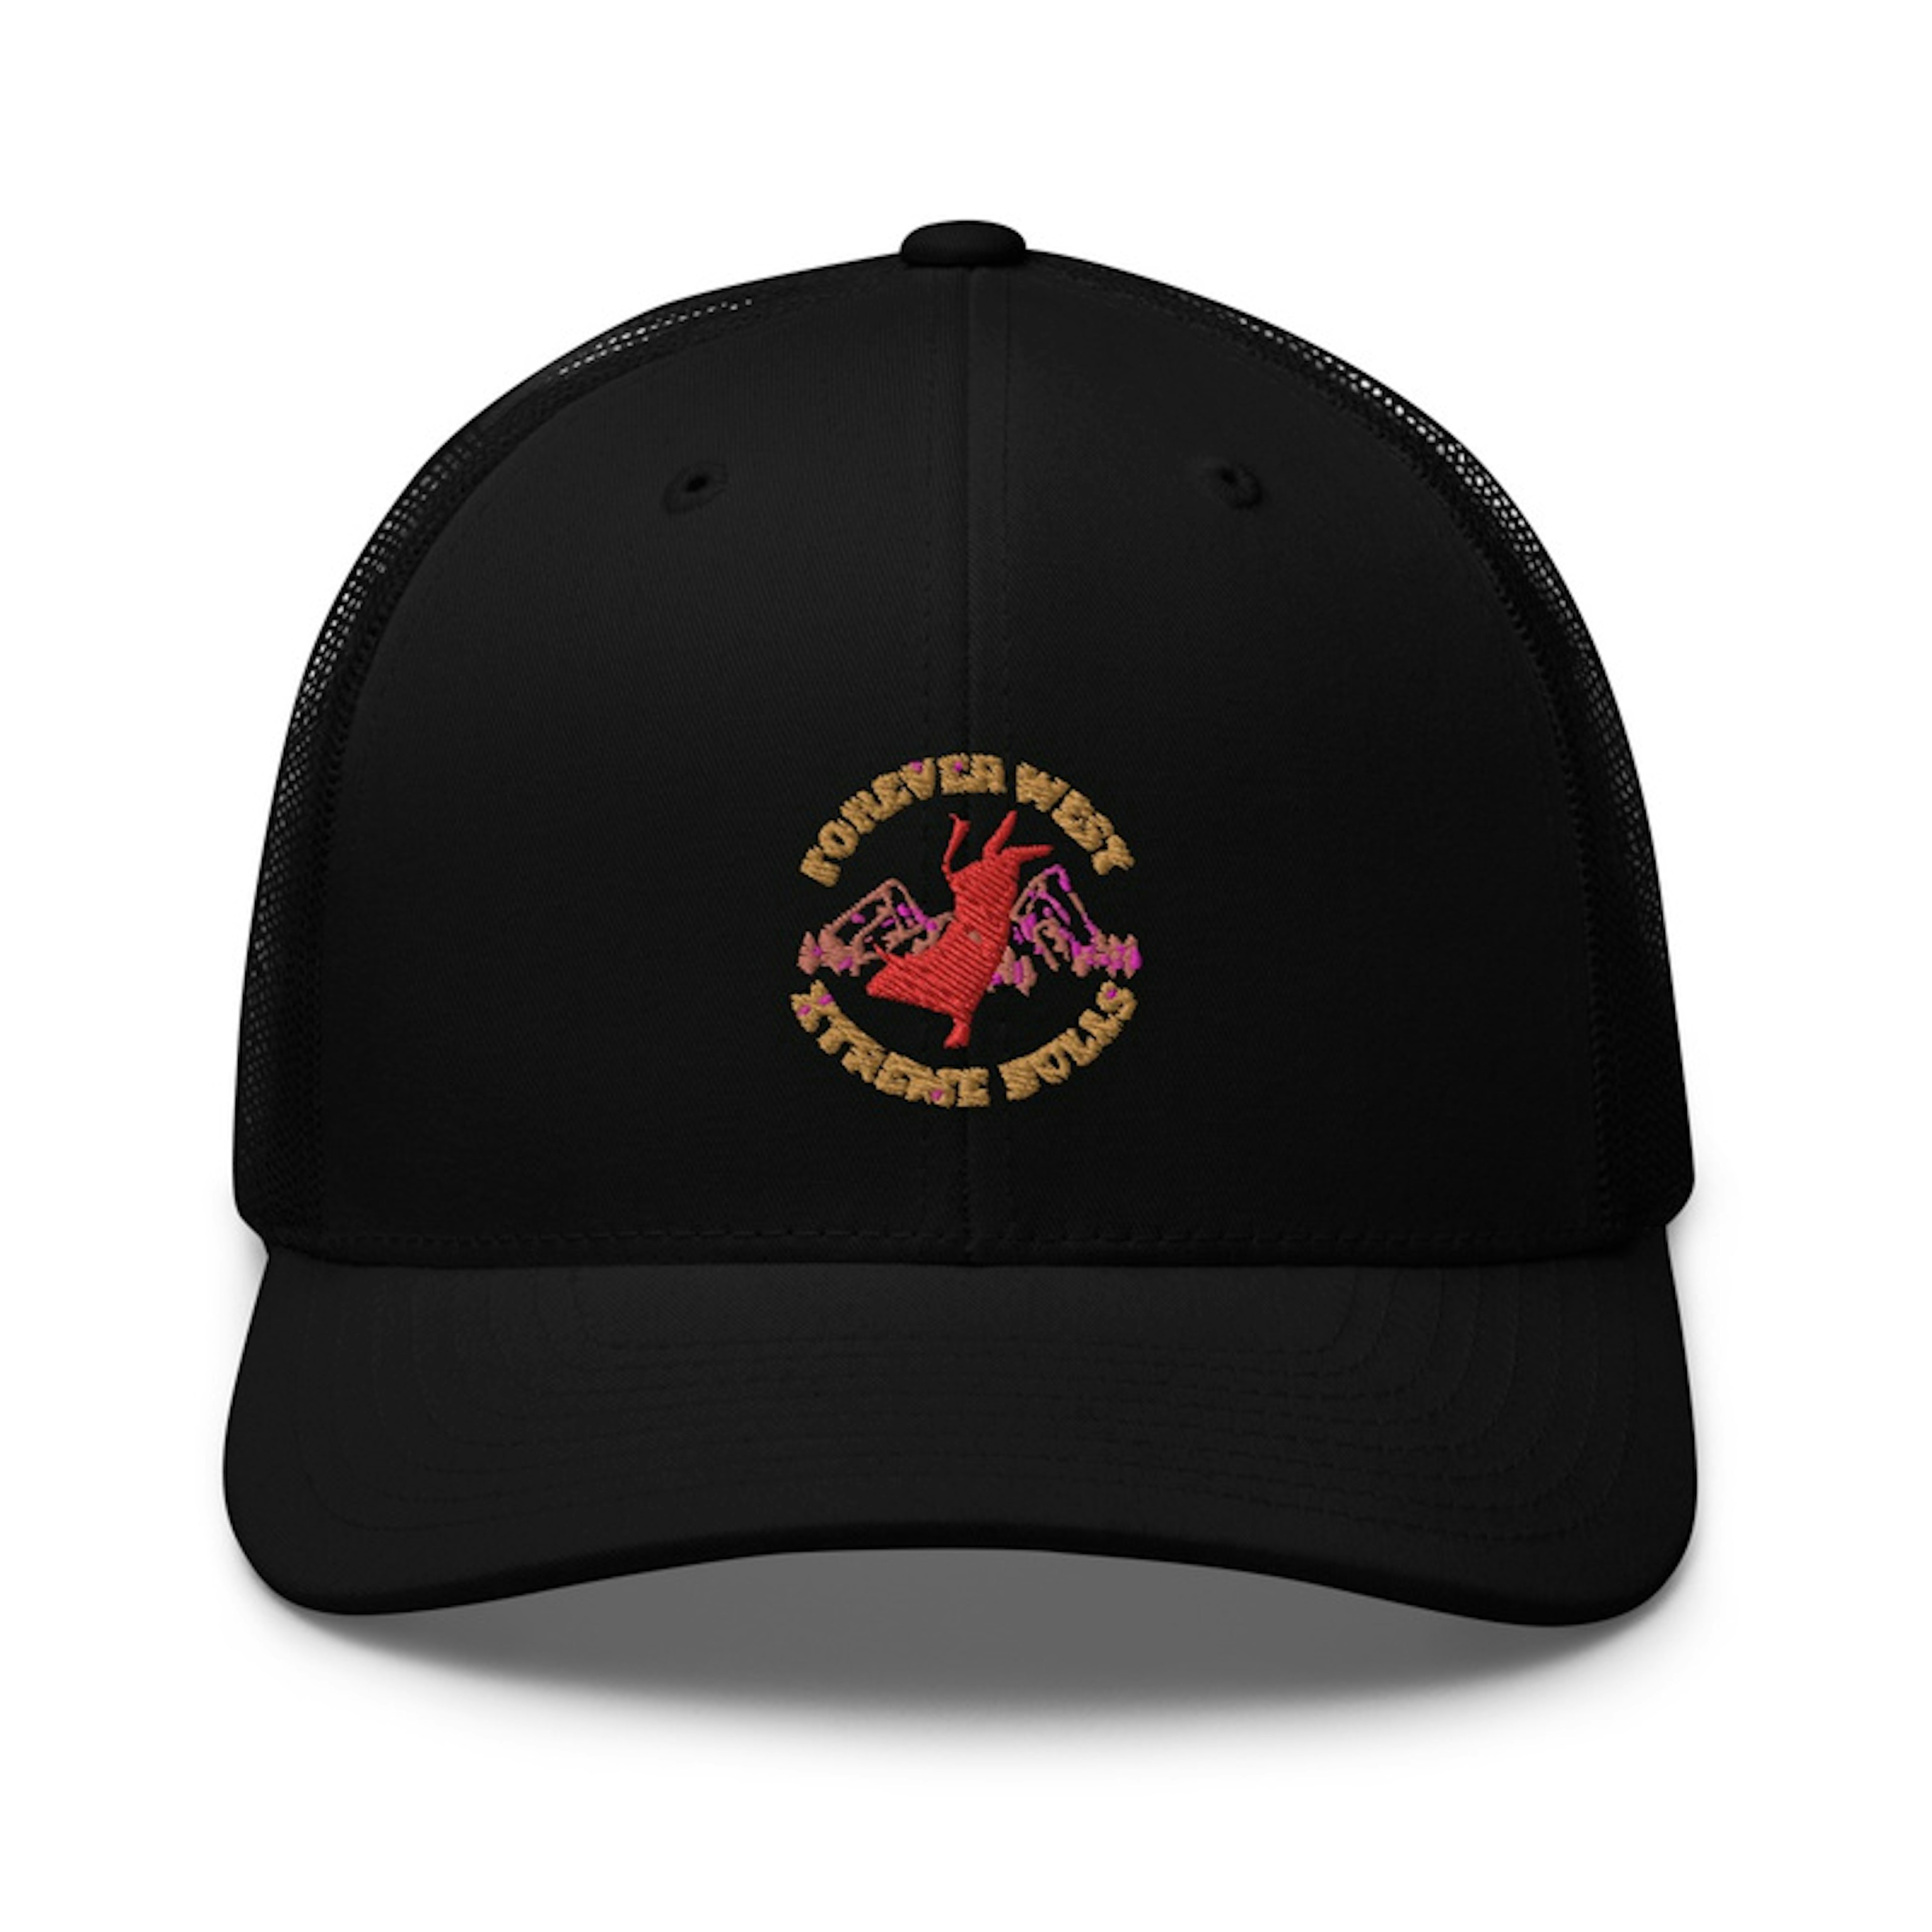 Forever West Xtreme Bulls - Trucker Cap